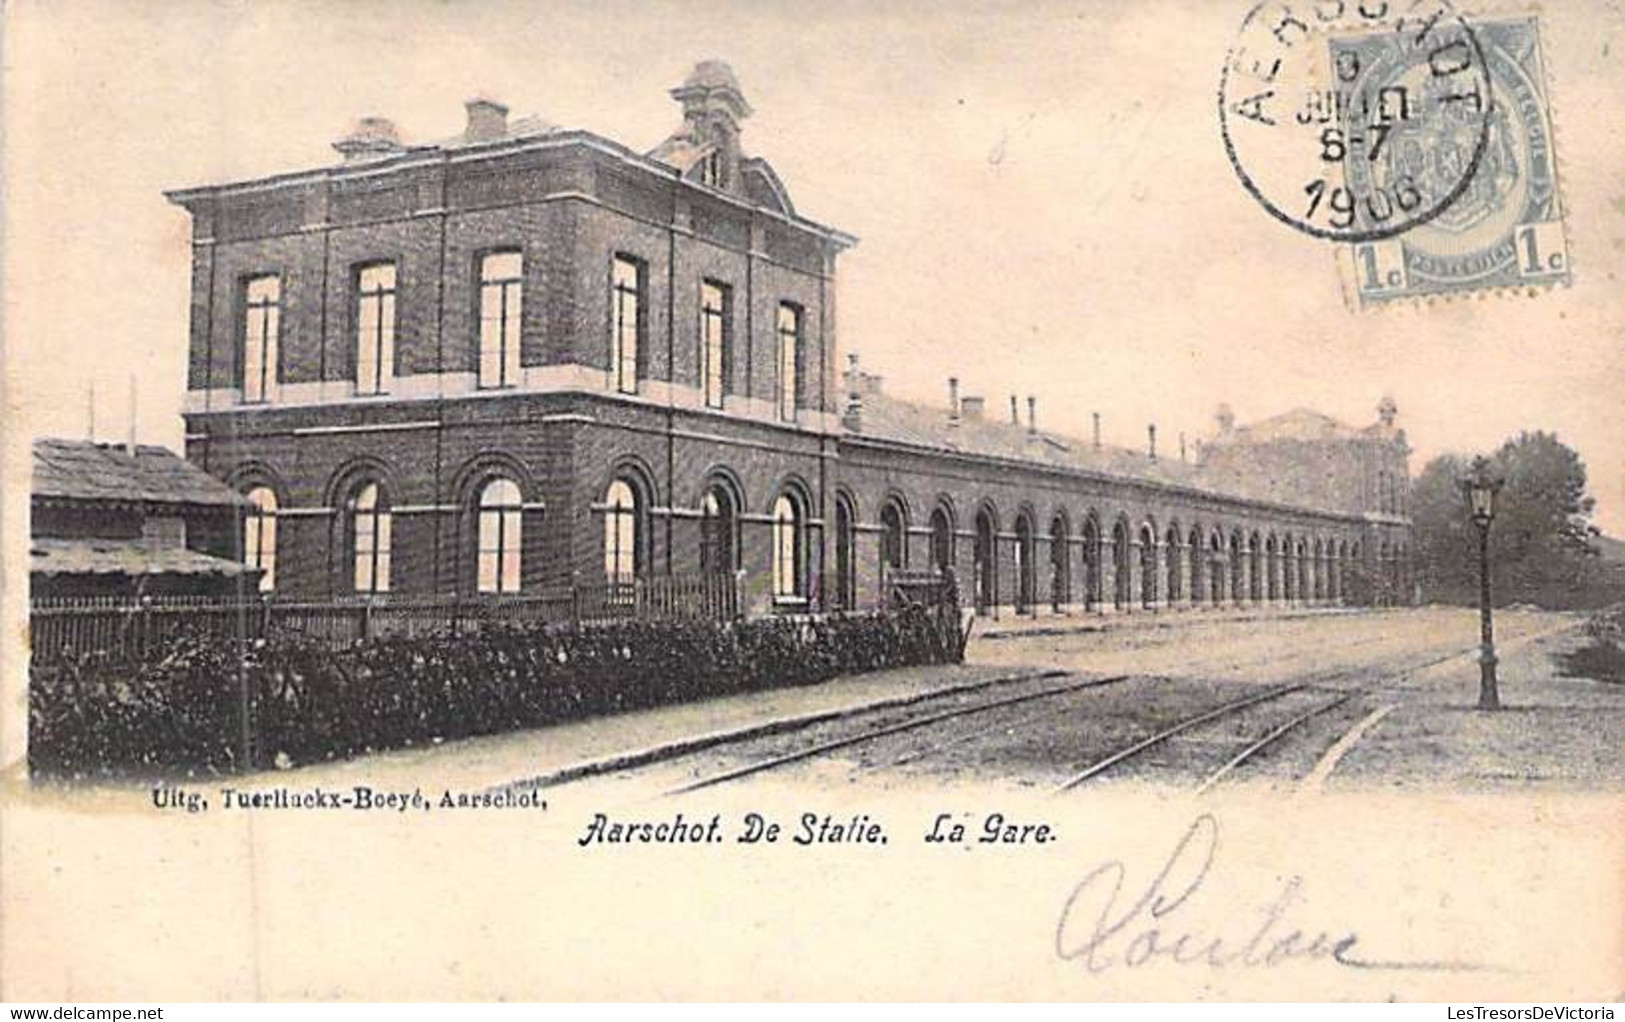 Belgique - Aarschot - De Statie - La Gare - Edit. Tuerlinckx Boeyé - Précurseur - Colorisé  - Carte Postale Ancienne - Aarschot